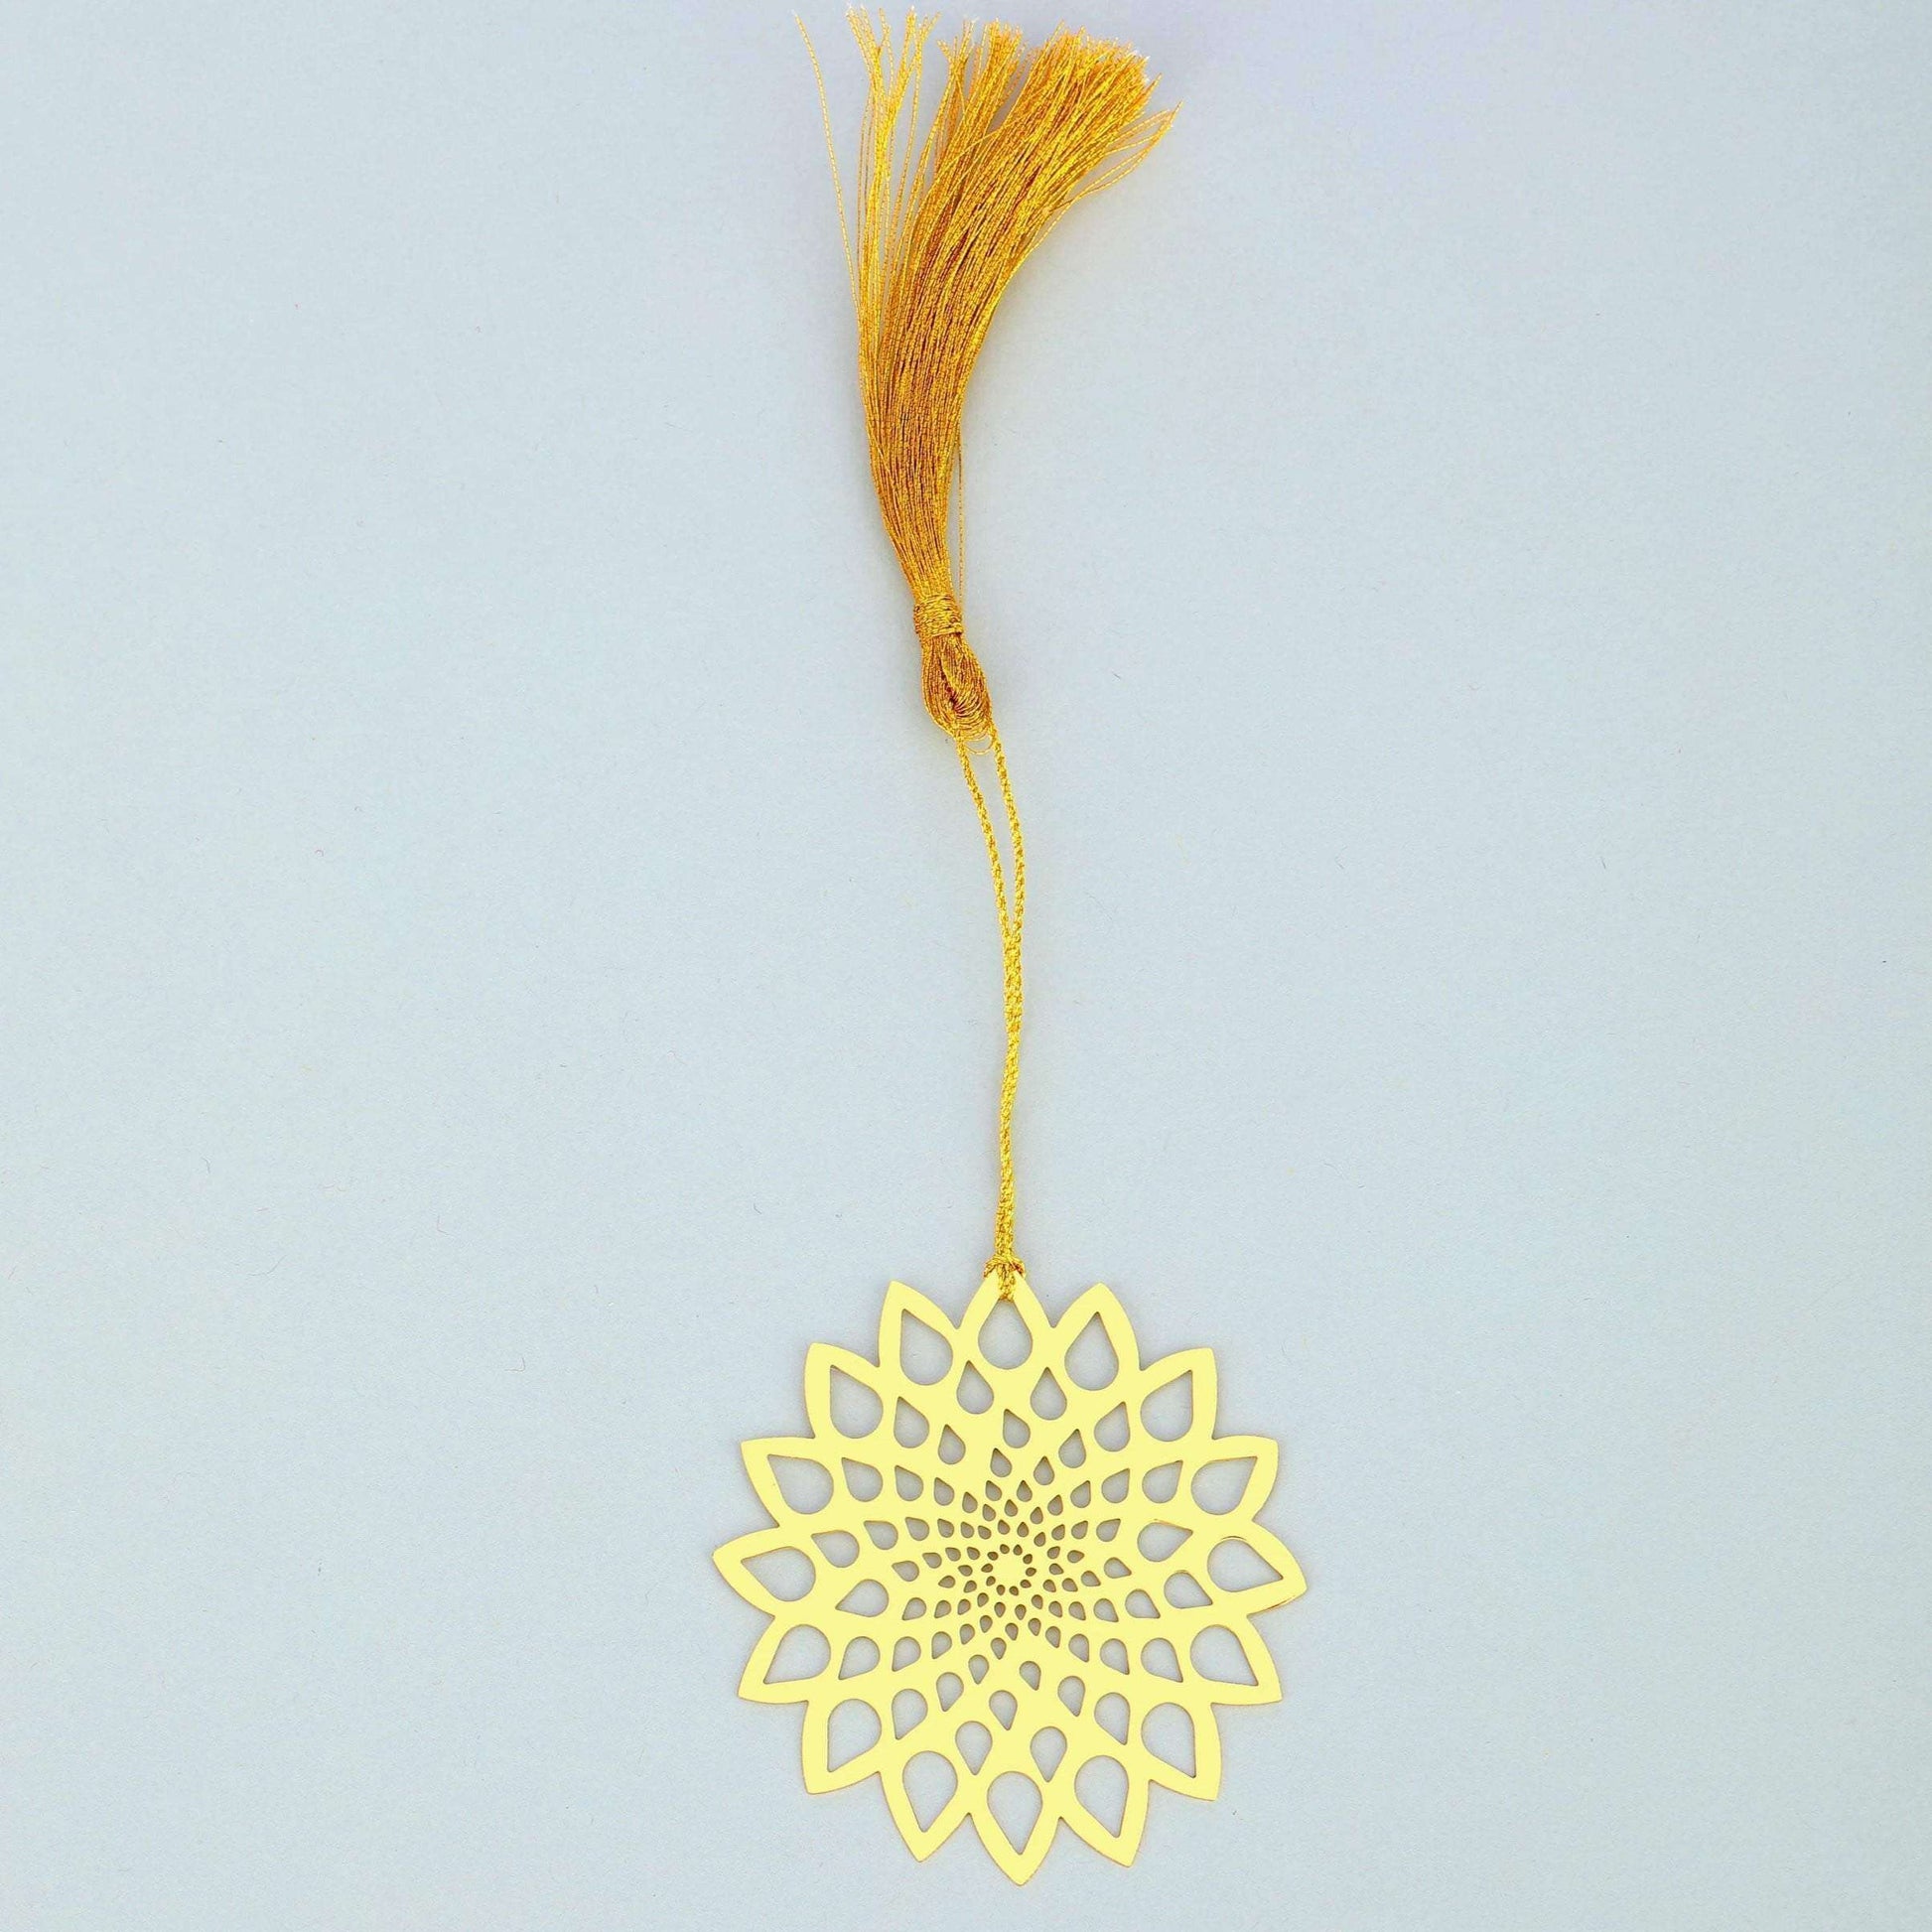 Concentric Petals Golden Brass Metal Bookmark with Golden Tassel - artystagallery